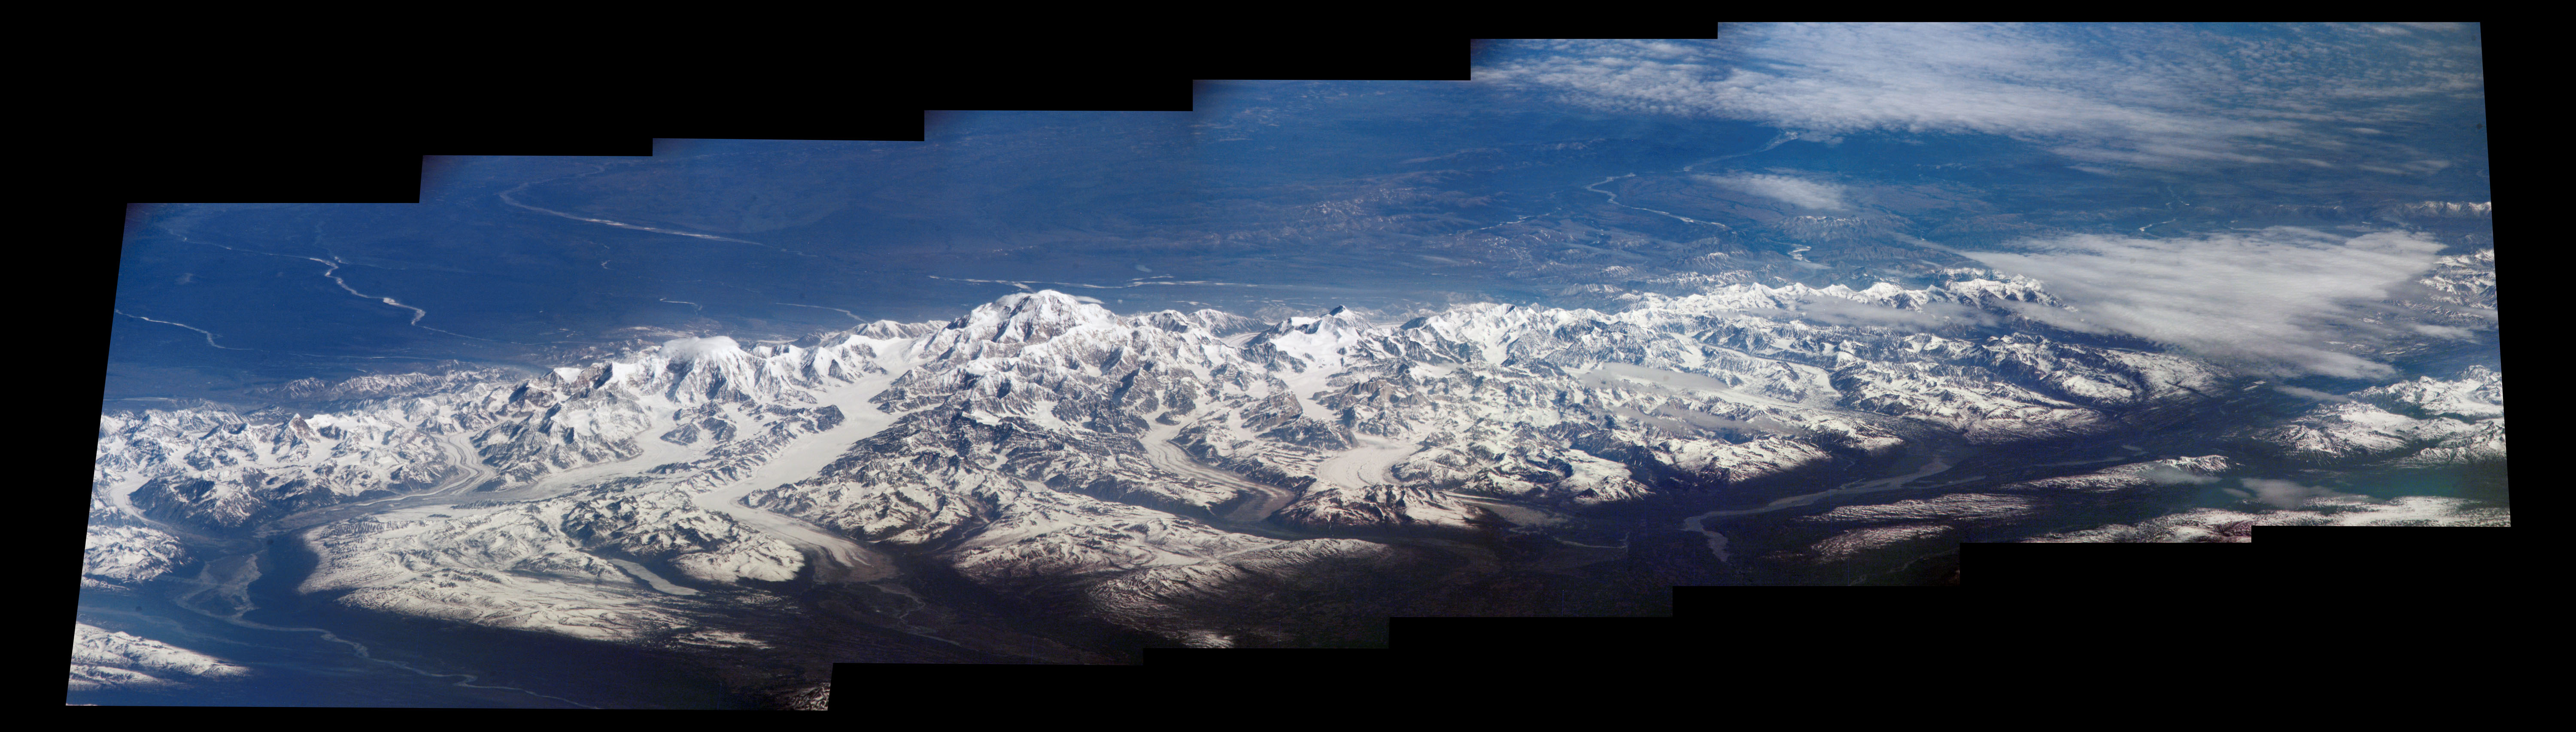 Denali and the Alaska Range